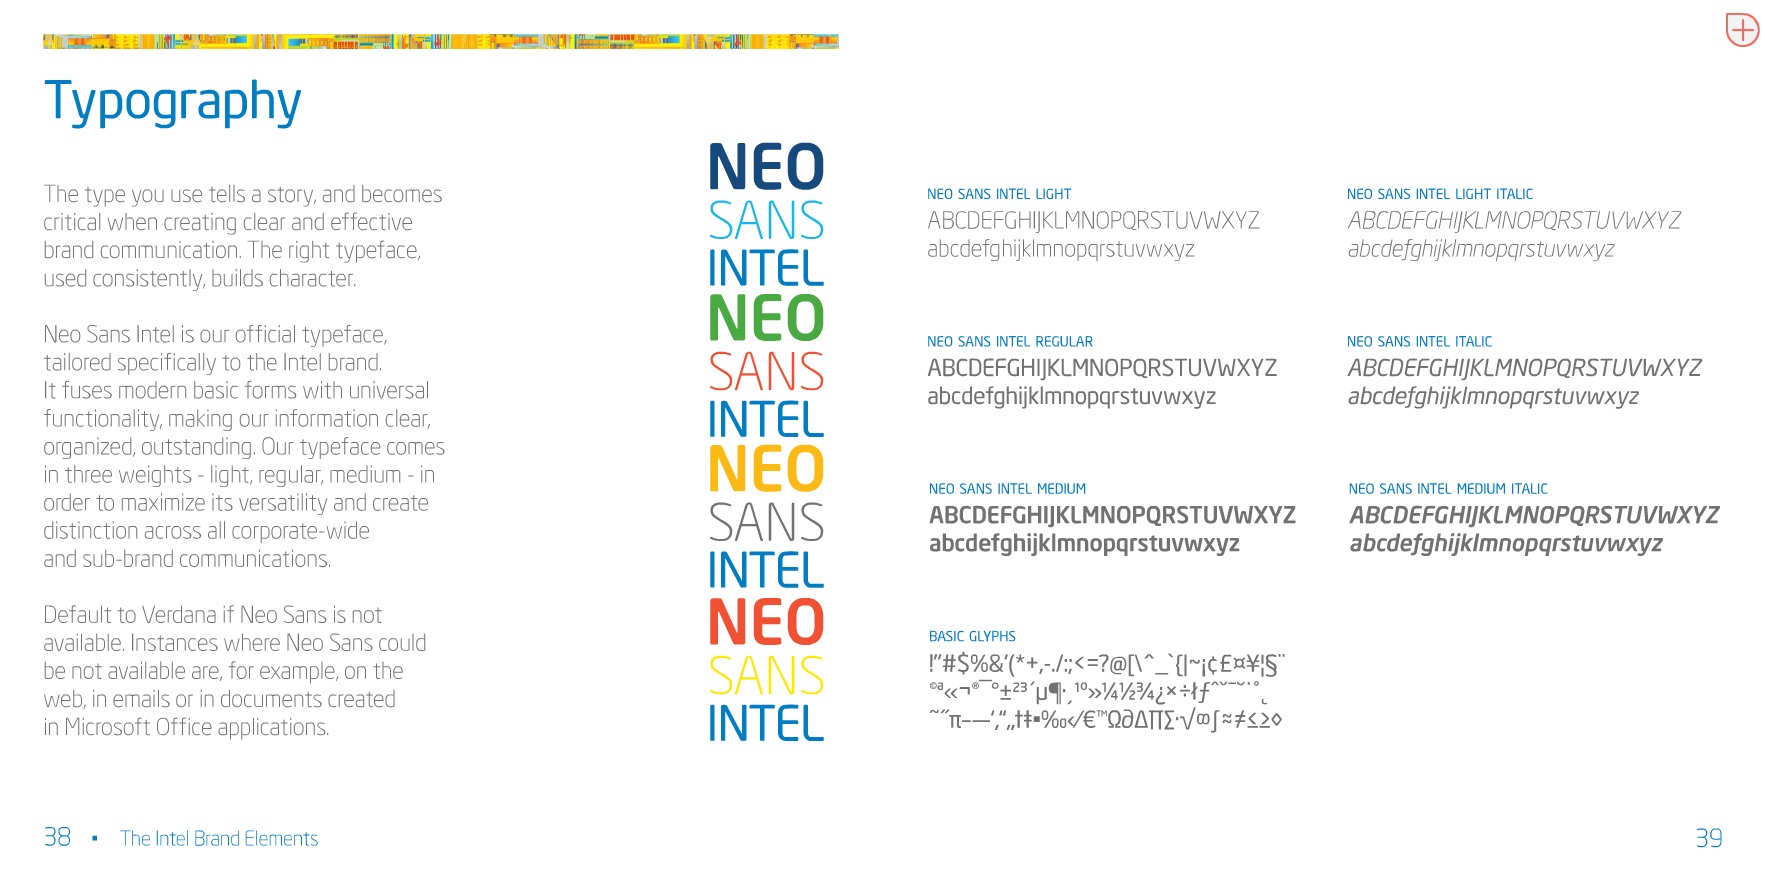 Neo sans. Neo Sans Intel. Neo Sans шрифт. Intel Italic. Бренд стандарт RАL 387.